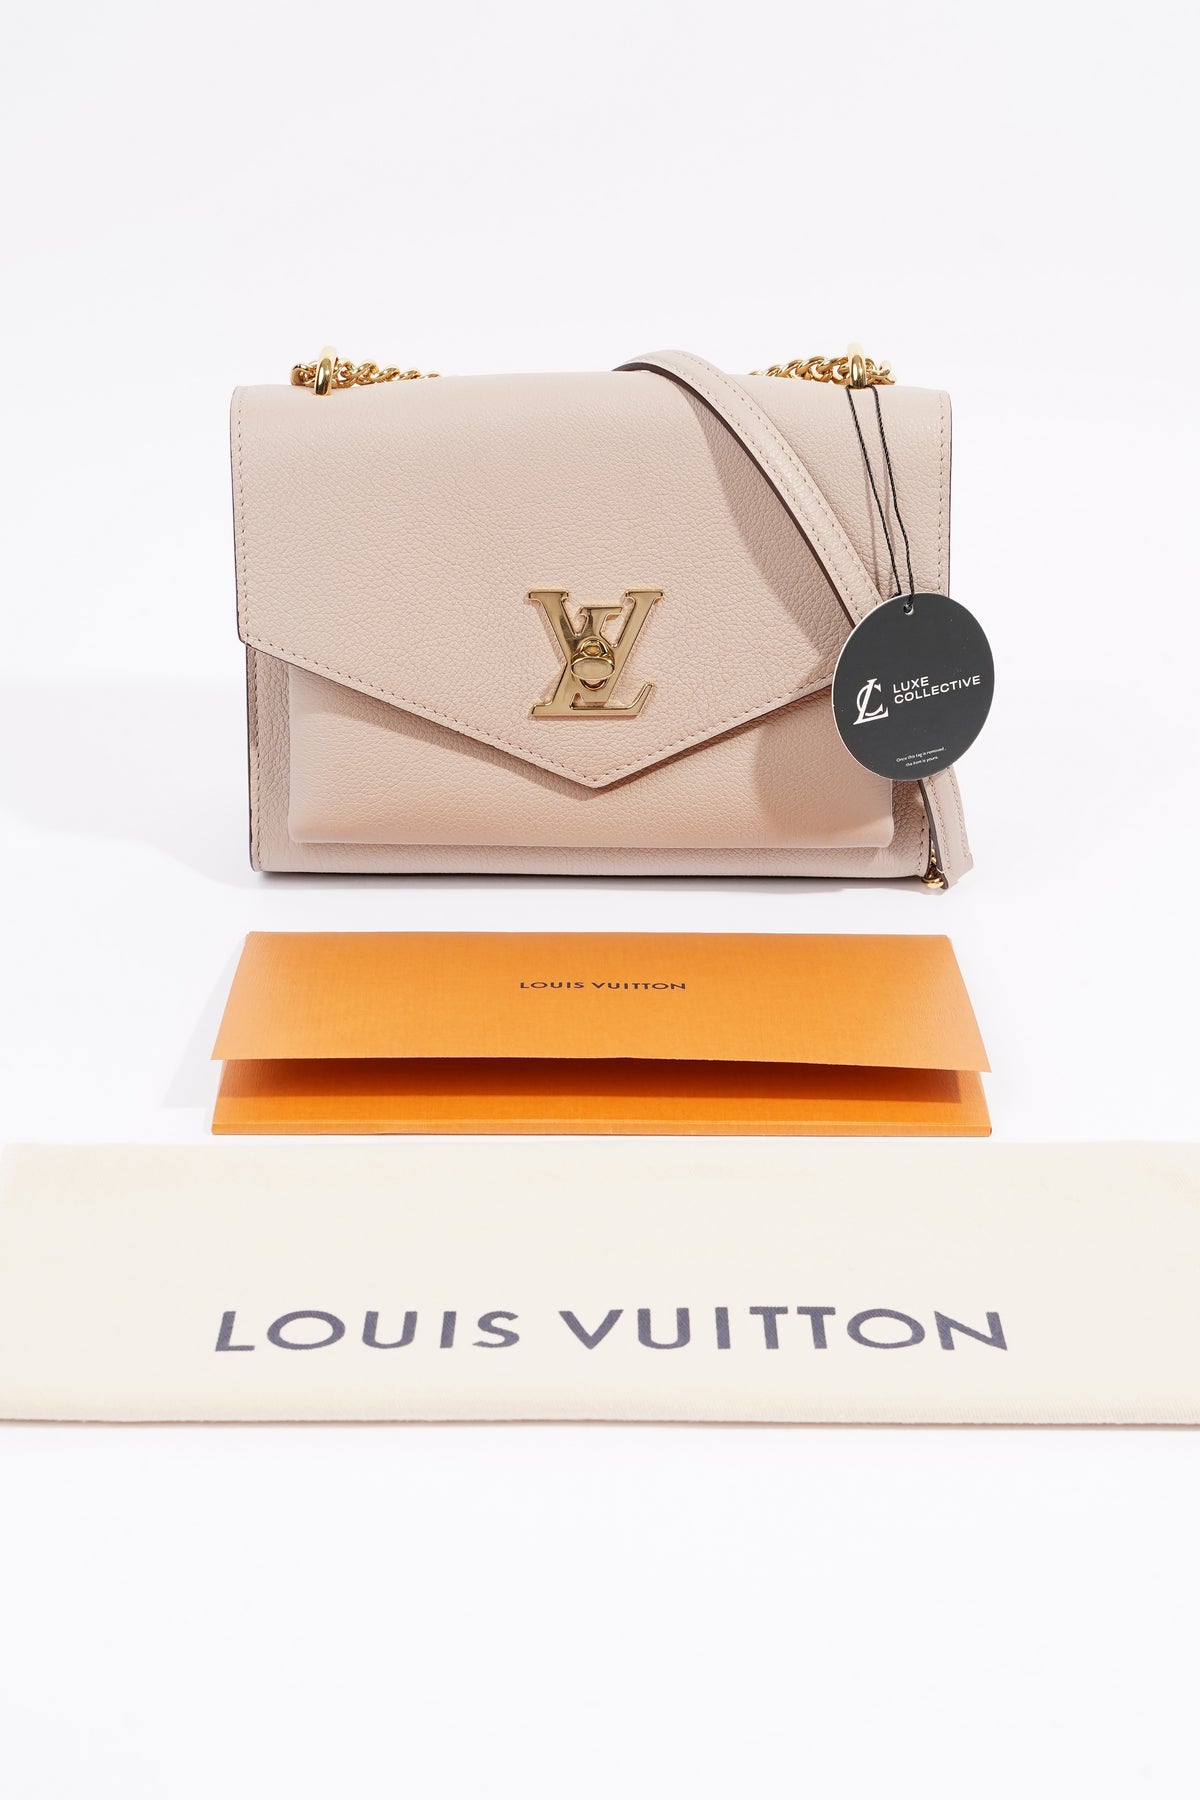 Louis Vuitton Lockme Tender in Griege - SOLD